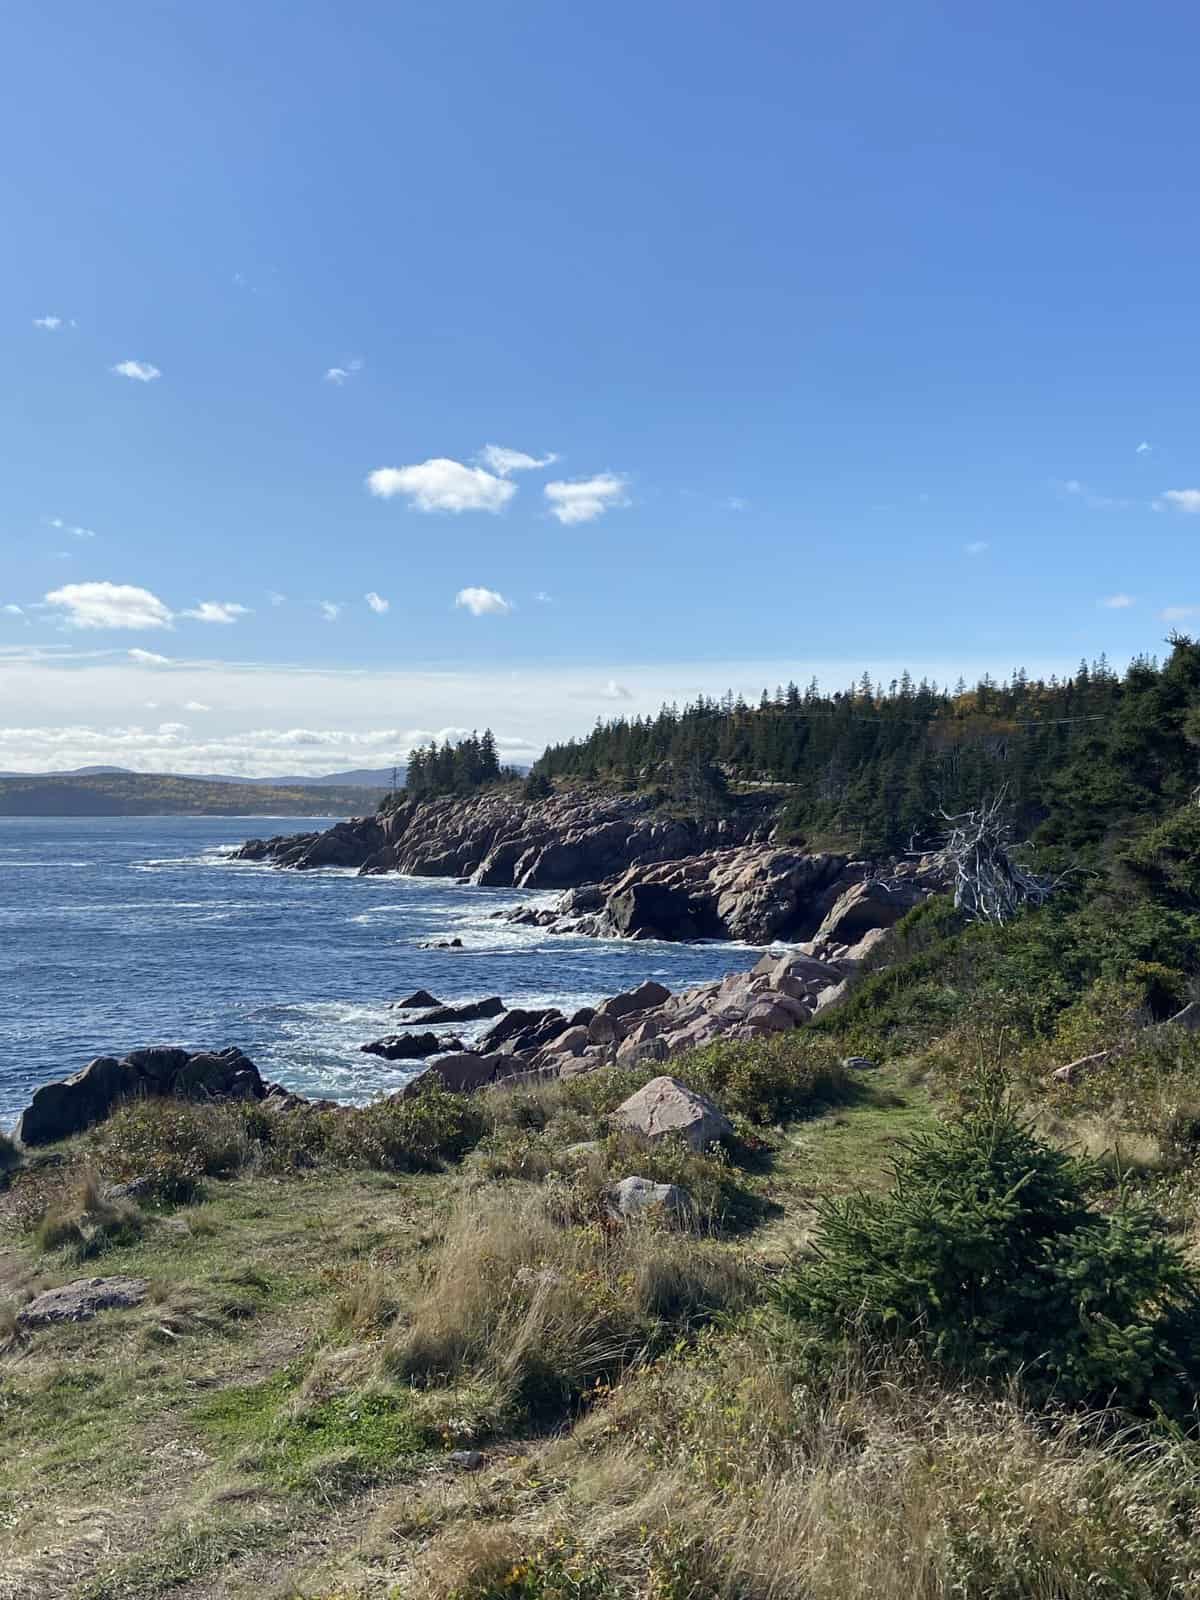 Lakies Head on the Cabot Trail, Cape Breton Island, Nova Scotia